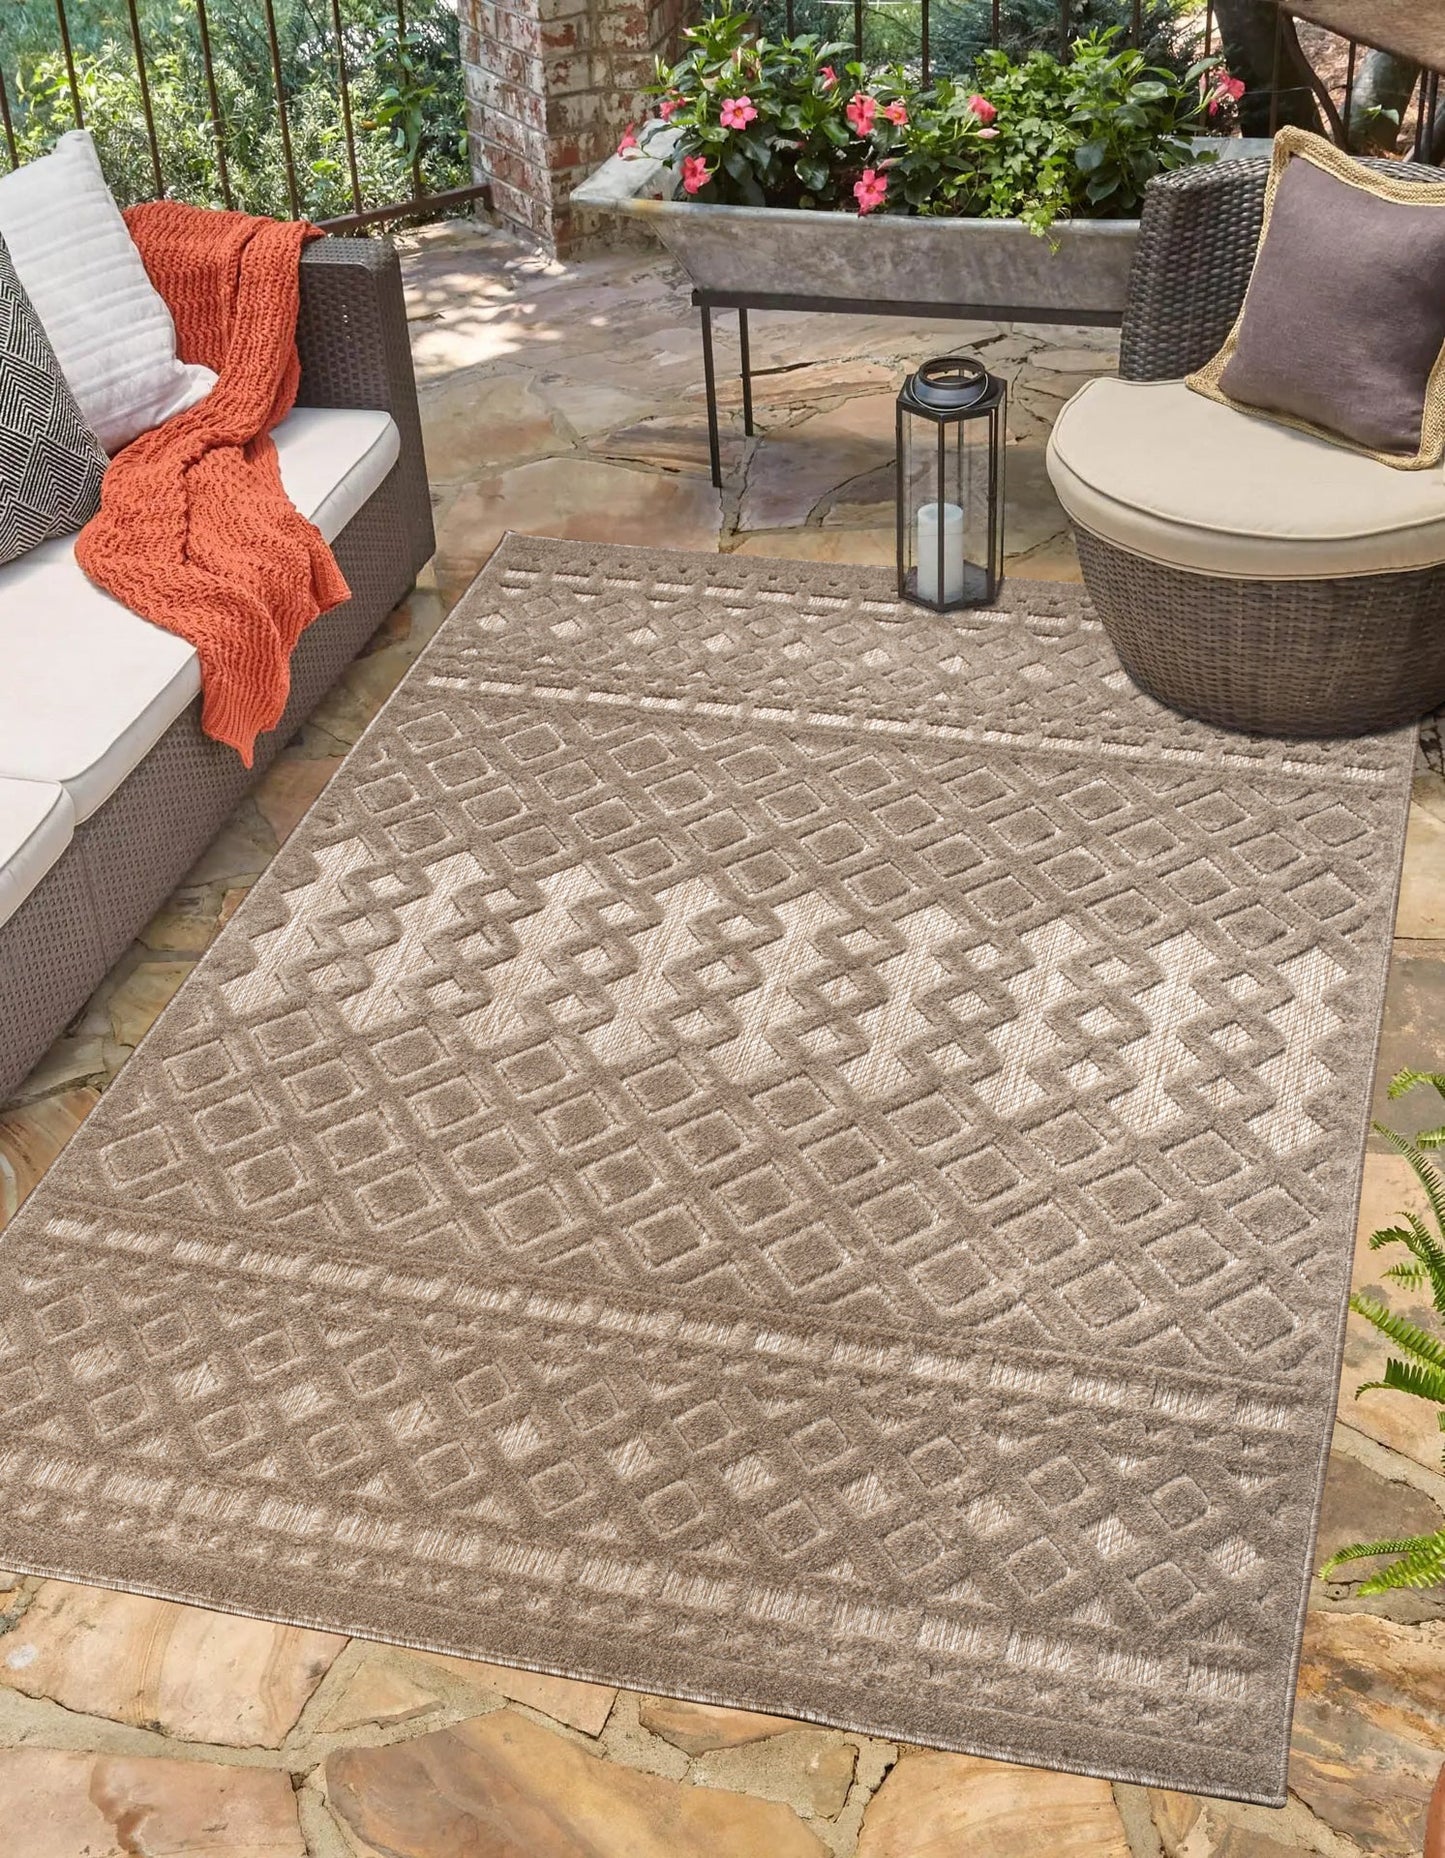 Geometric Modern Contemporary Outdoor Indoor Area Rug Carpet For Patio, Porch, Dining Area, Balcony, Living Room, Bedroom - Brown - Cream Beige